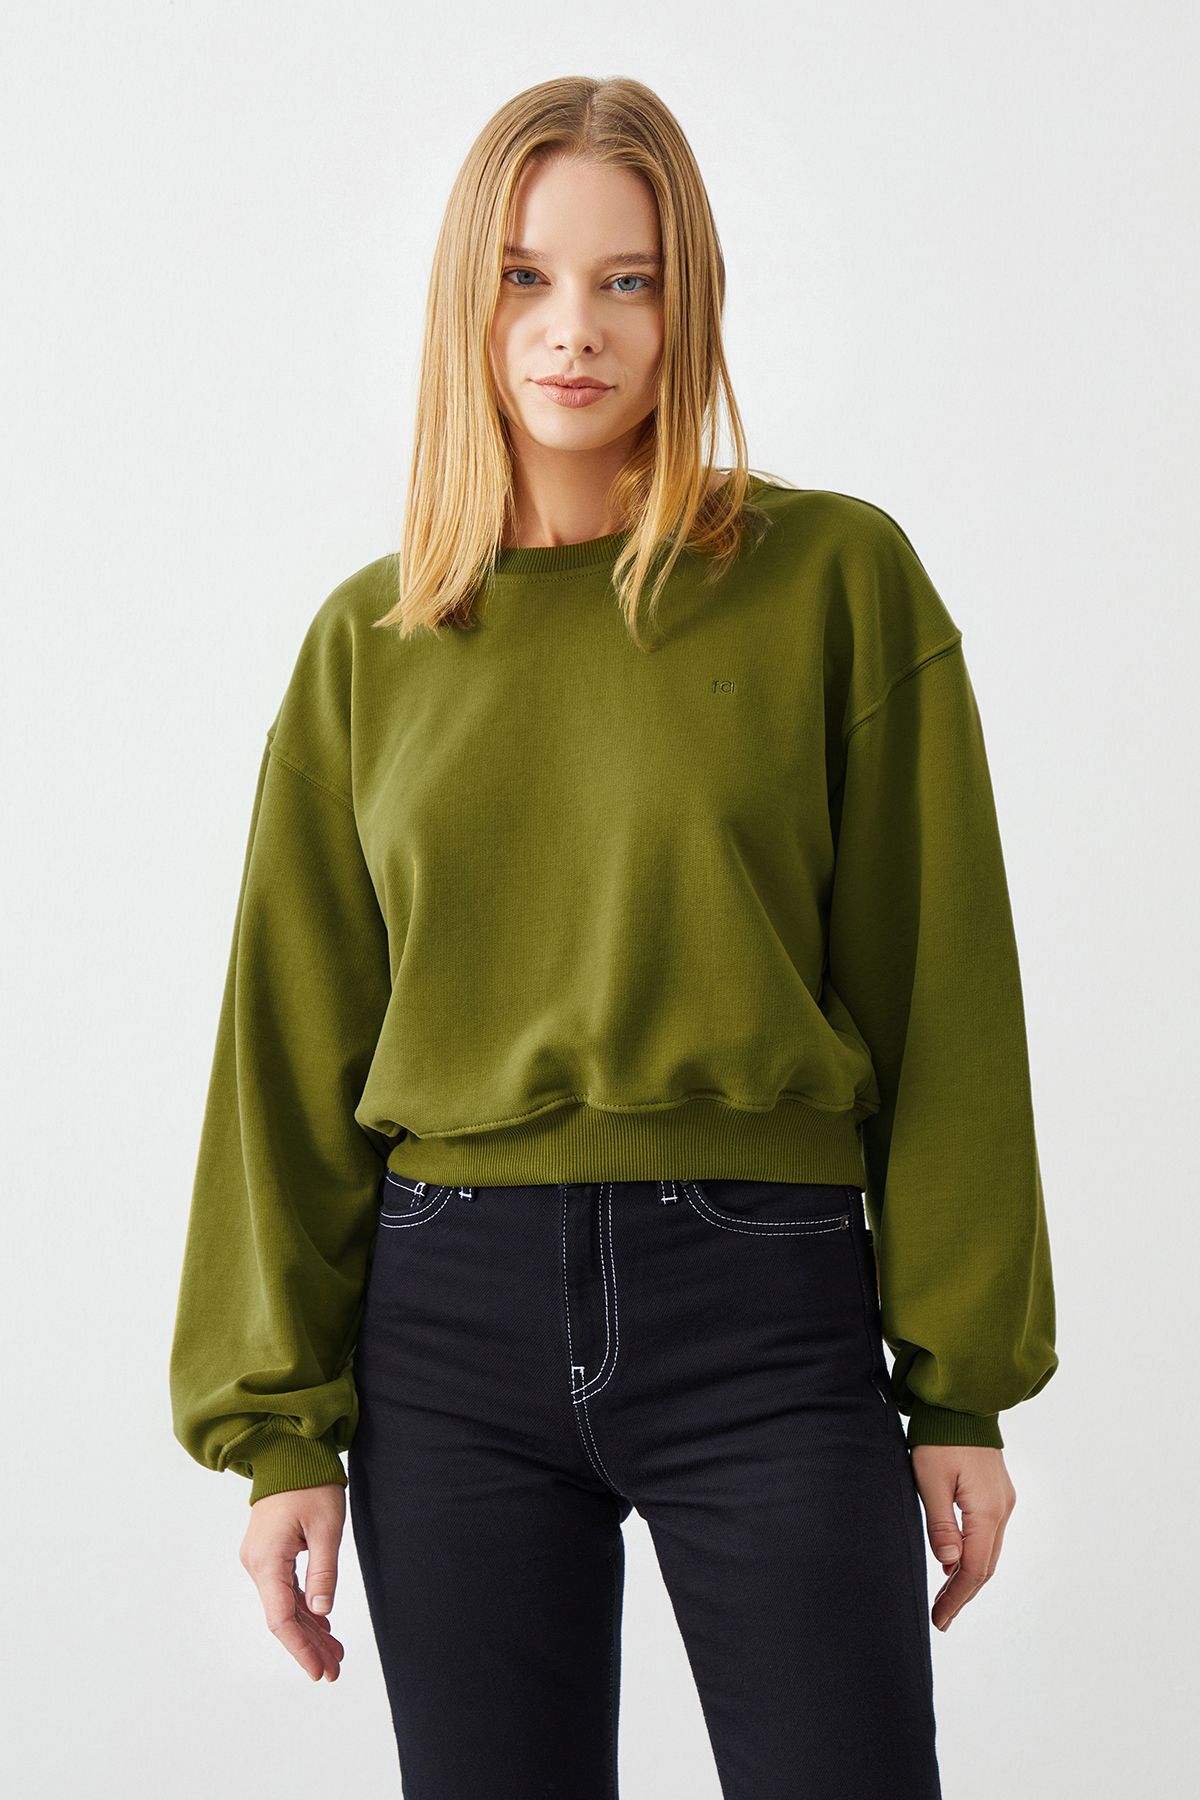 Eco-Conscious Woman Wearing VITA Avocado Crop Sweatshirt - Stylish and Sustainable